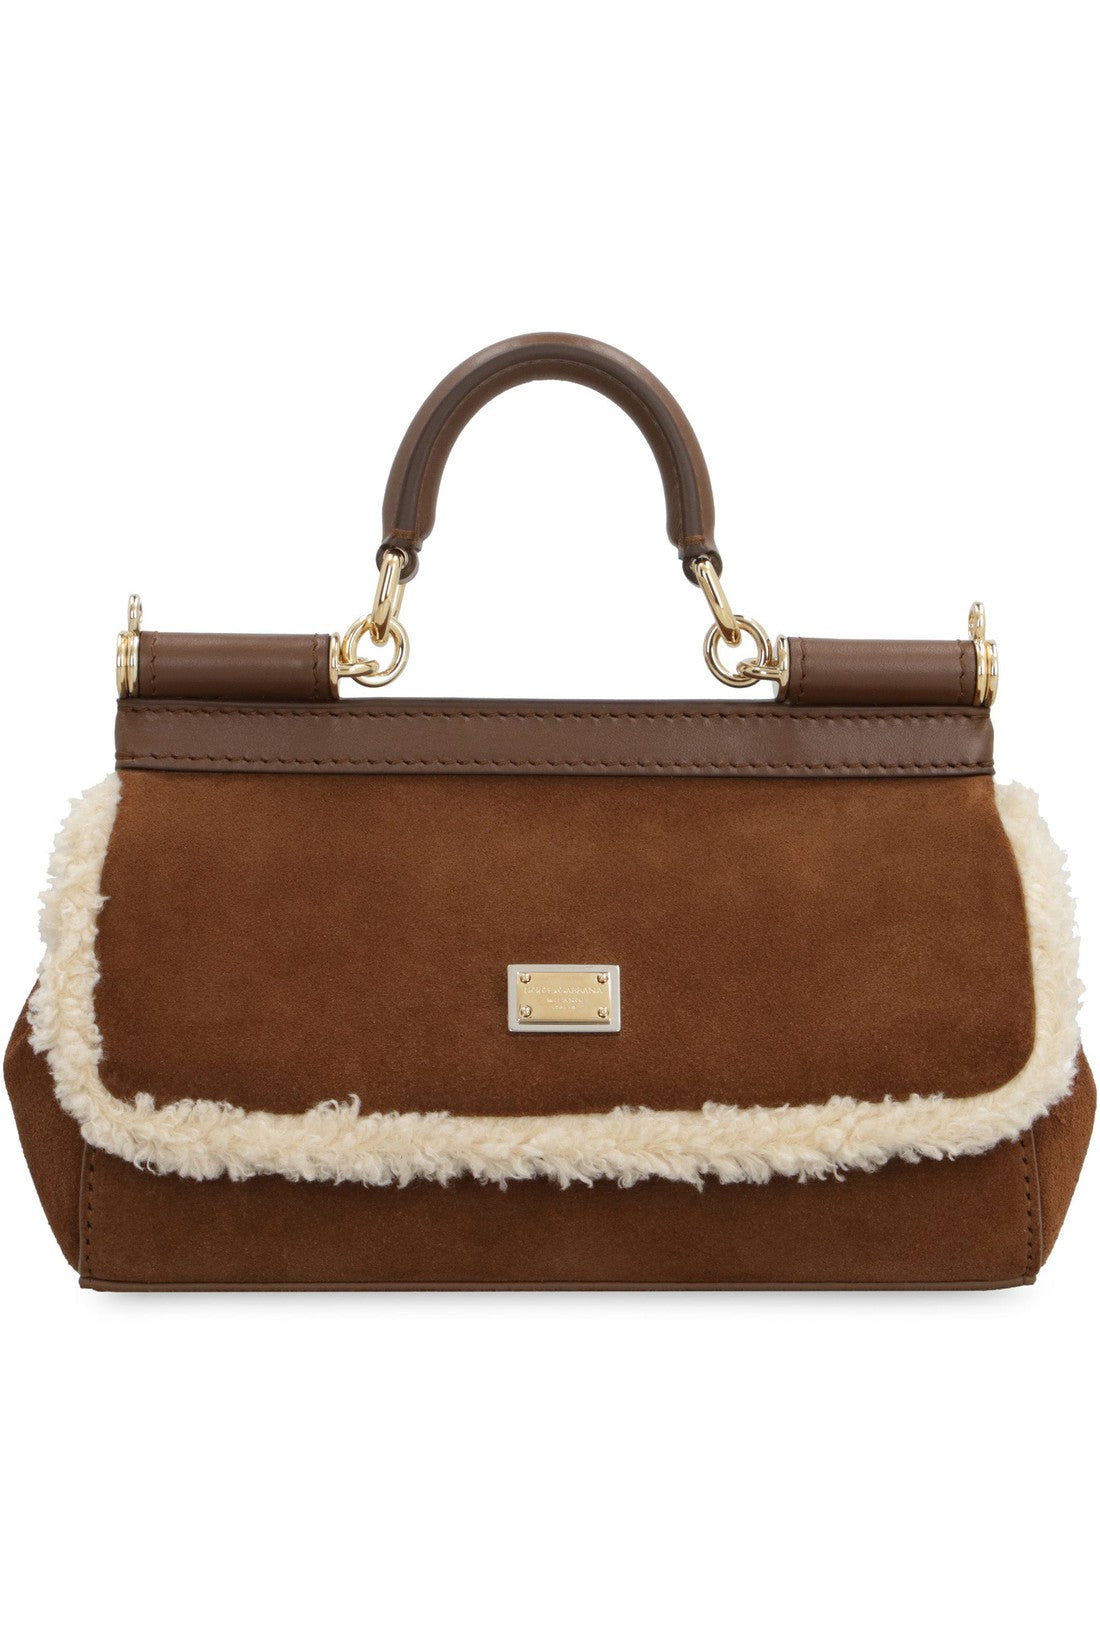 Dolce & Gabbana-OUTLET-SALE-Sicily suede handbag-ARCHIVIST